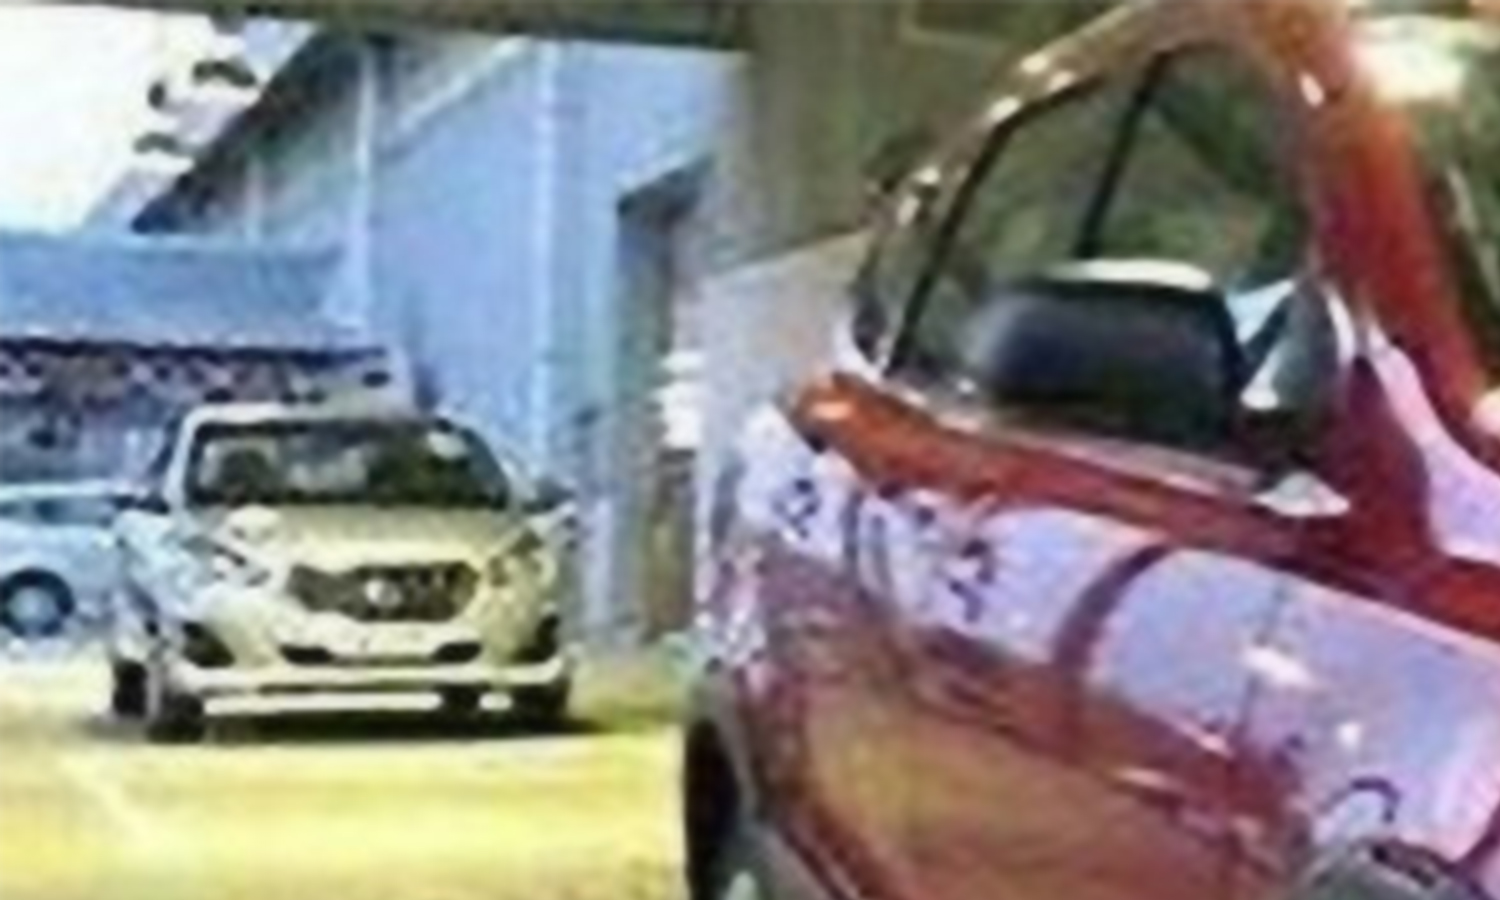 Berita, Bocoran Datsun Go Indonesia: Datsun Go Panca Facelift Tertangkap Kamera!